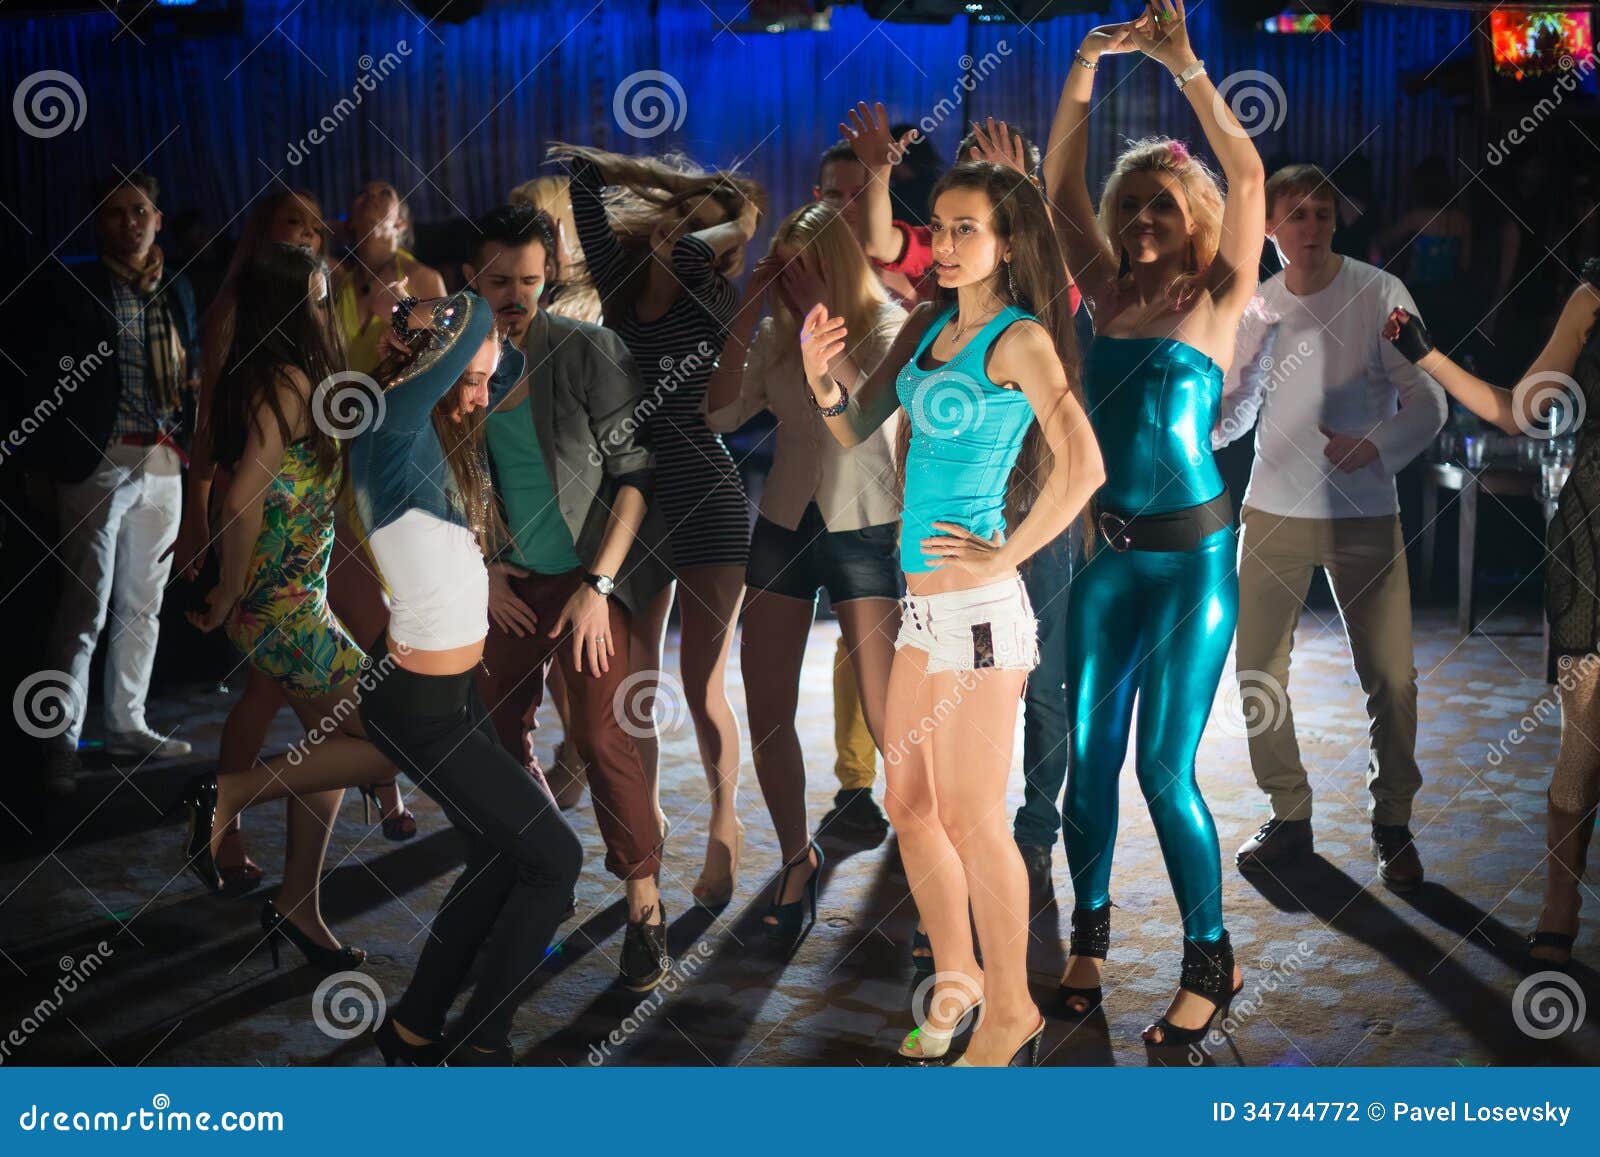 fourteen young people having fun and dancing